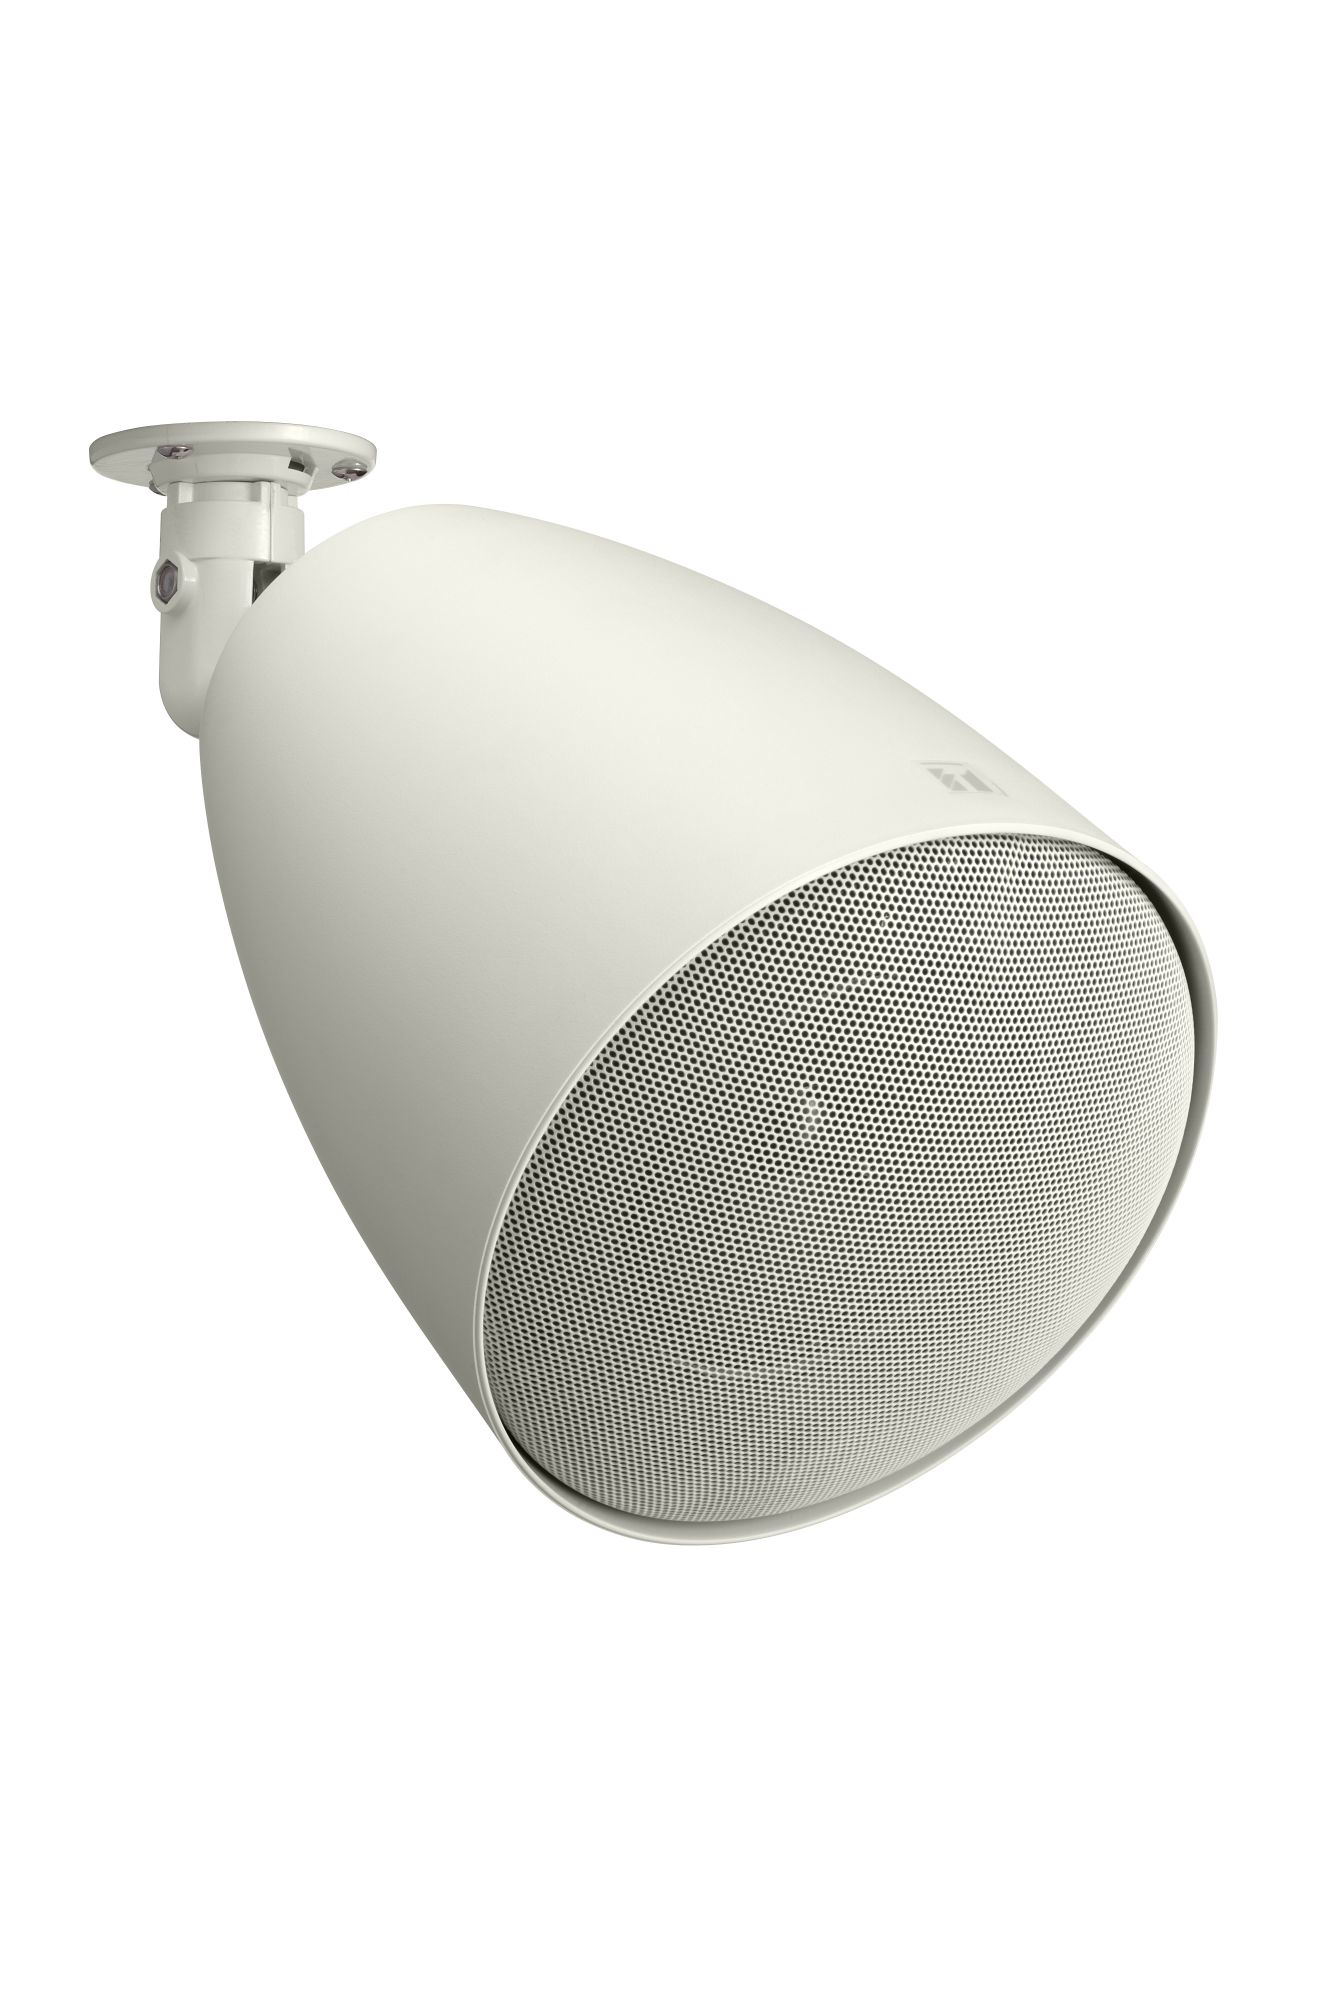 TOA PJ-304 loudspeaker White Wired 30 W